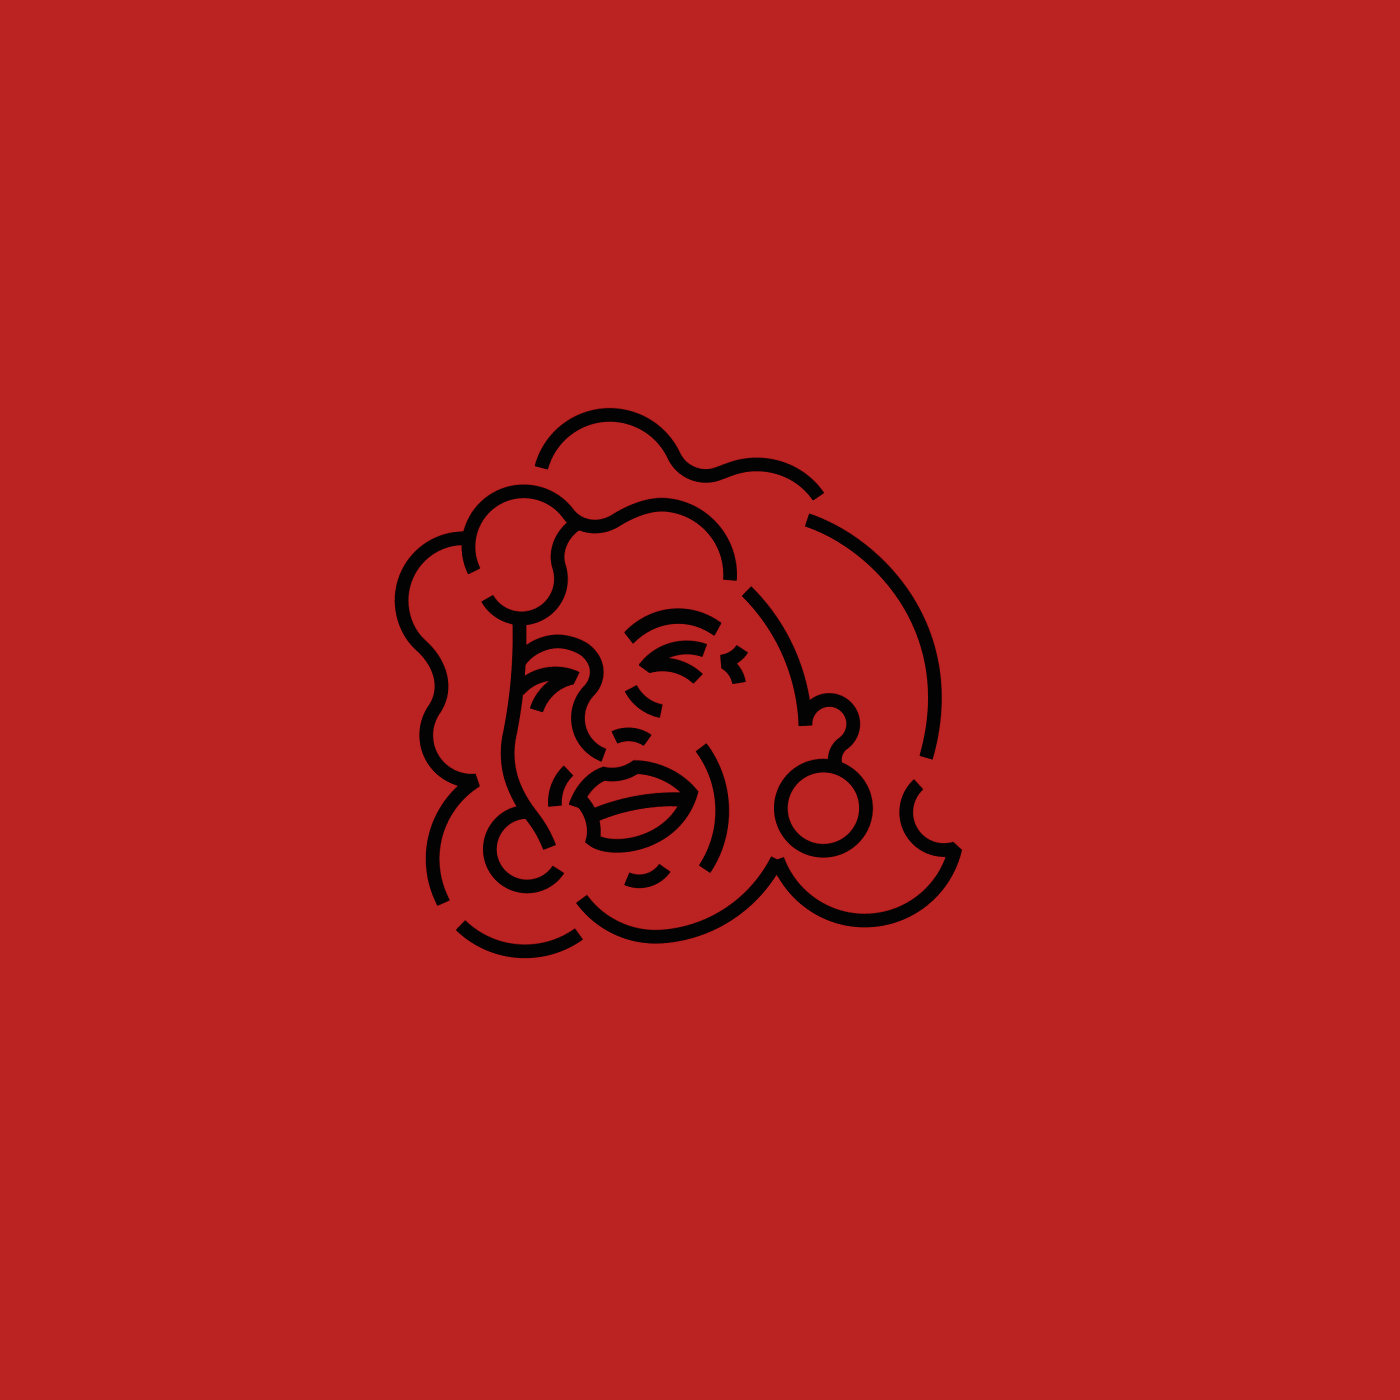 Sorry Mama brazil design duna design studio estudio duna pizza red symbol visual identity